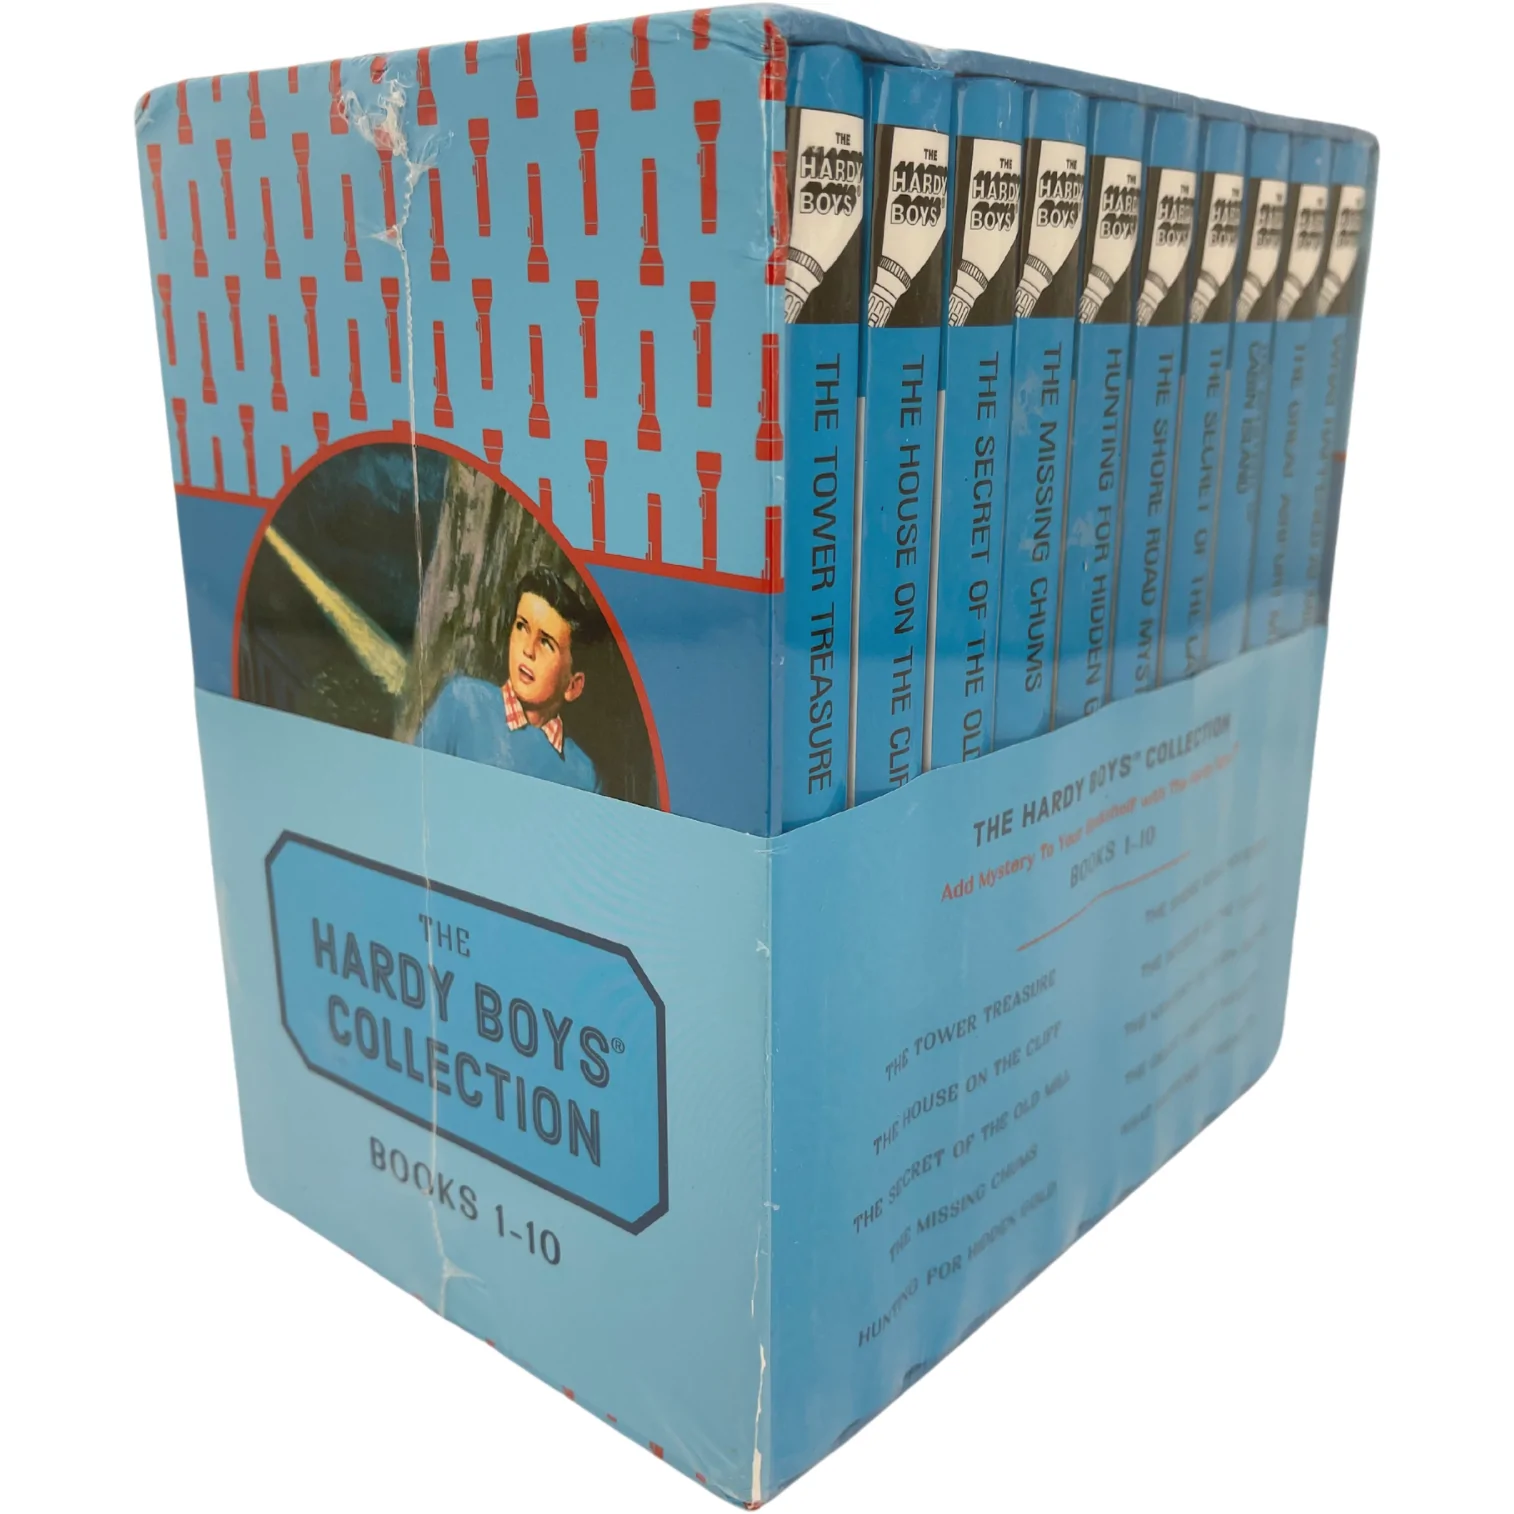 The Hardy Boys Book Set / Books 1-10 / Hardcover Box Set